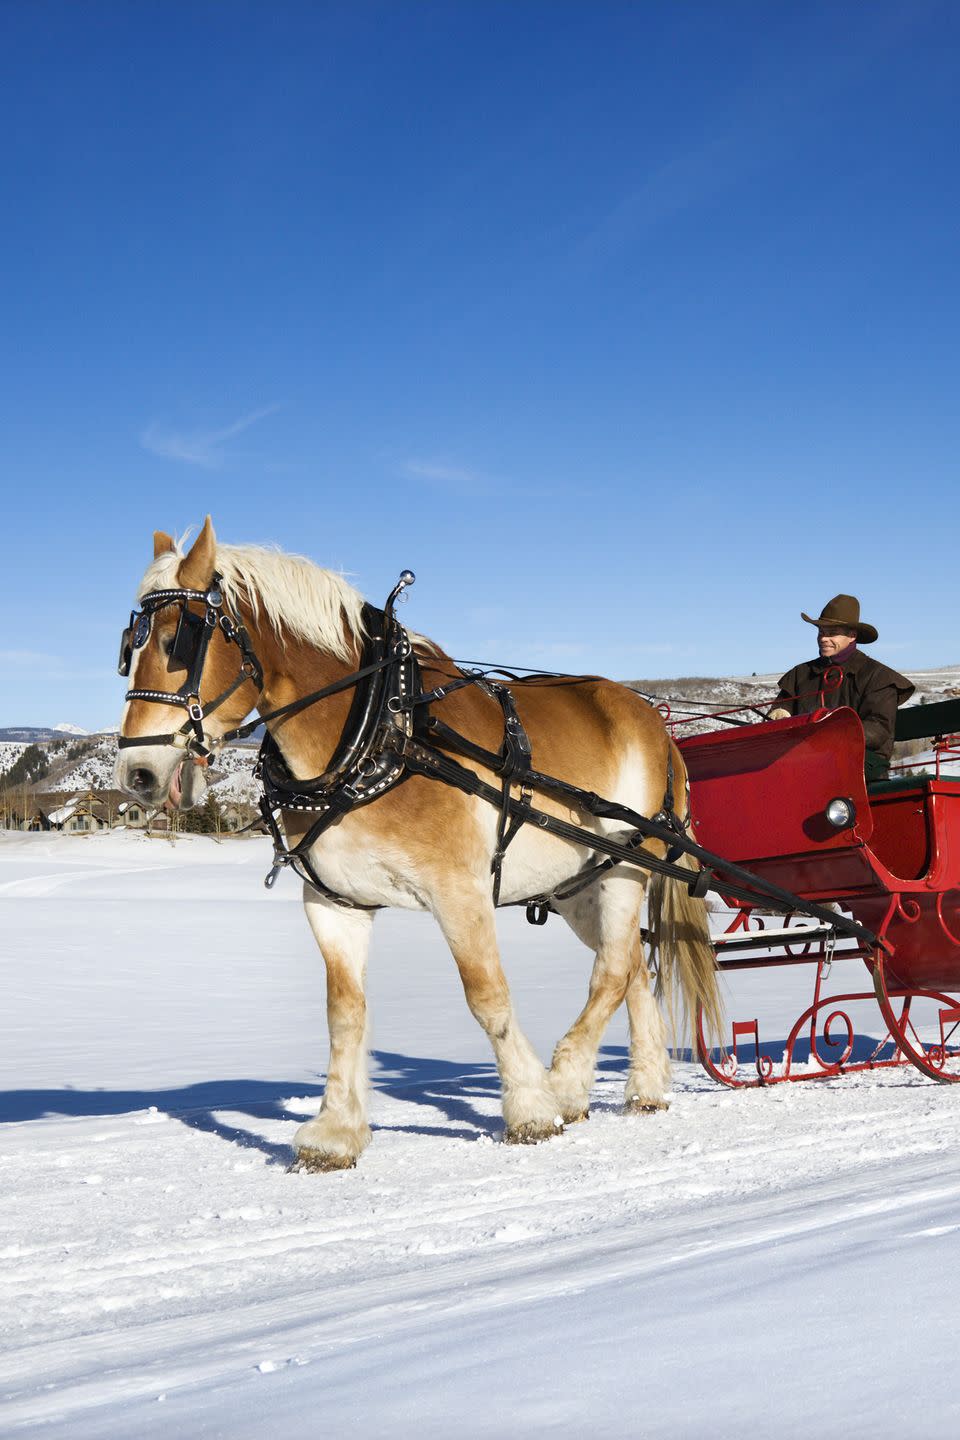 16) Go for a sleigh ride.